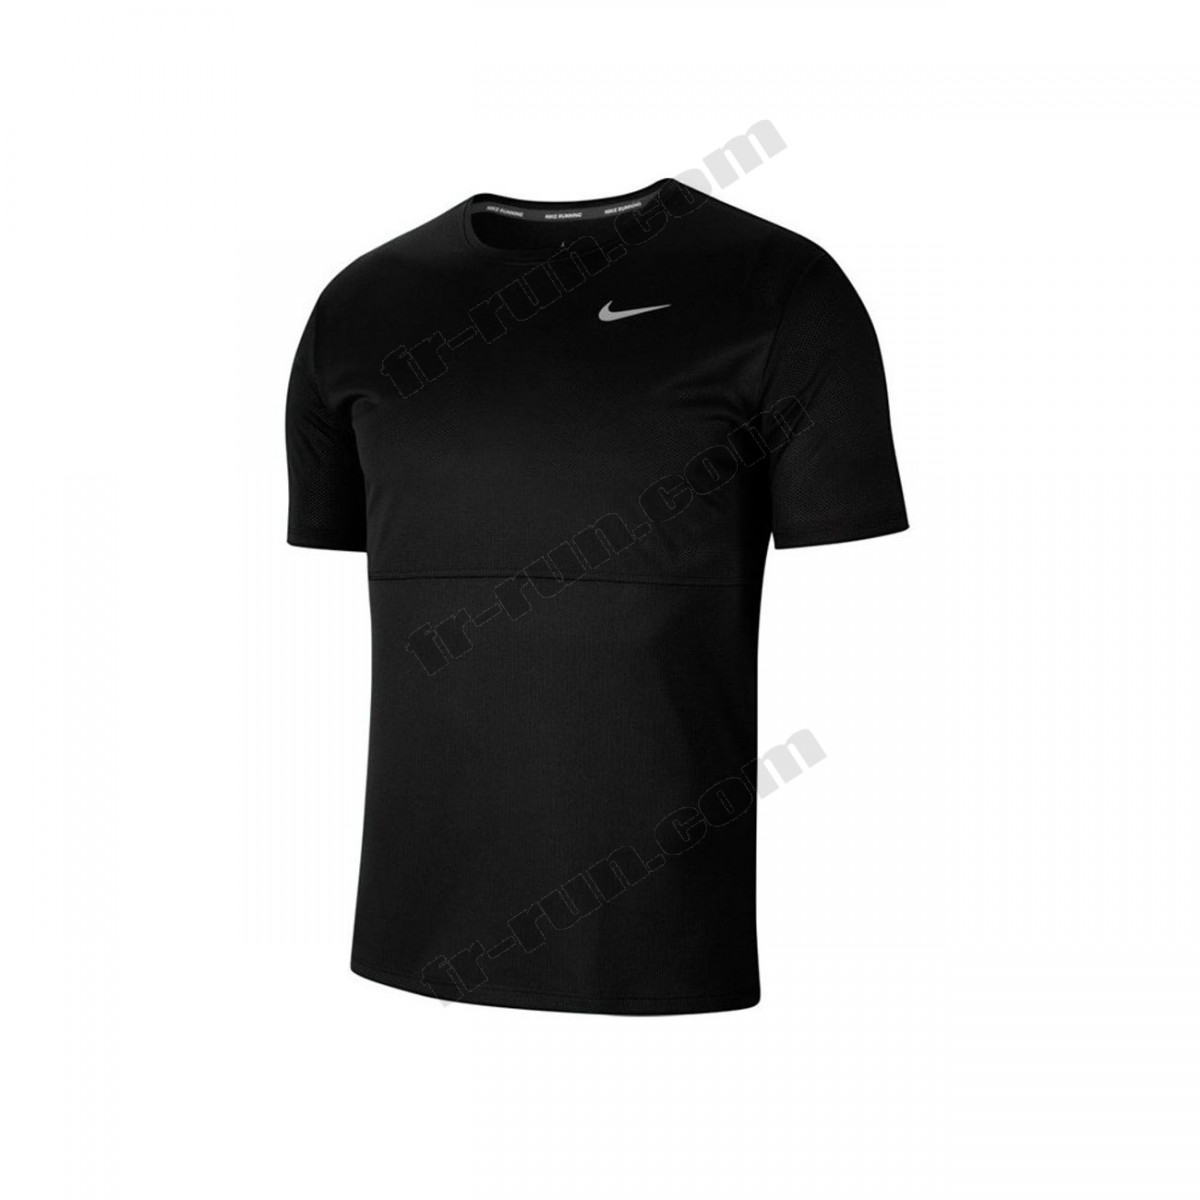 Nike/running homme NIKE Nike Breathe Run √ Nouveau style √ Soldes - -0